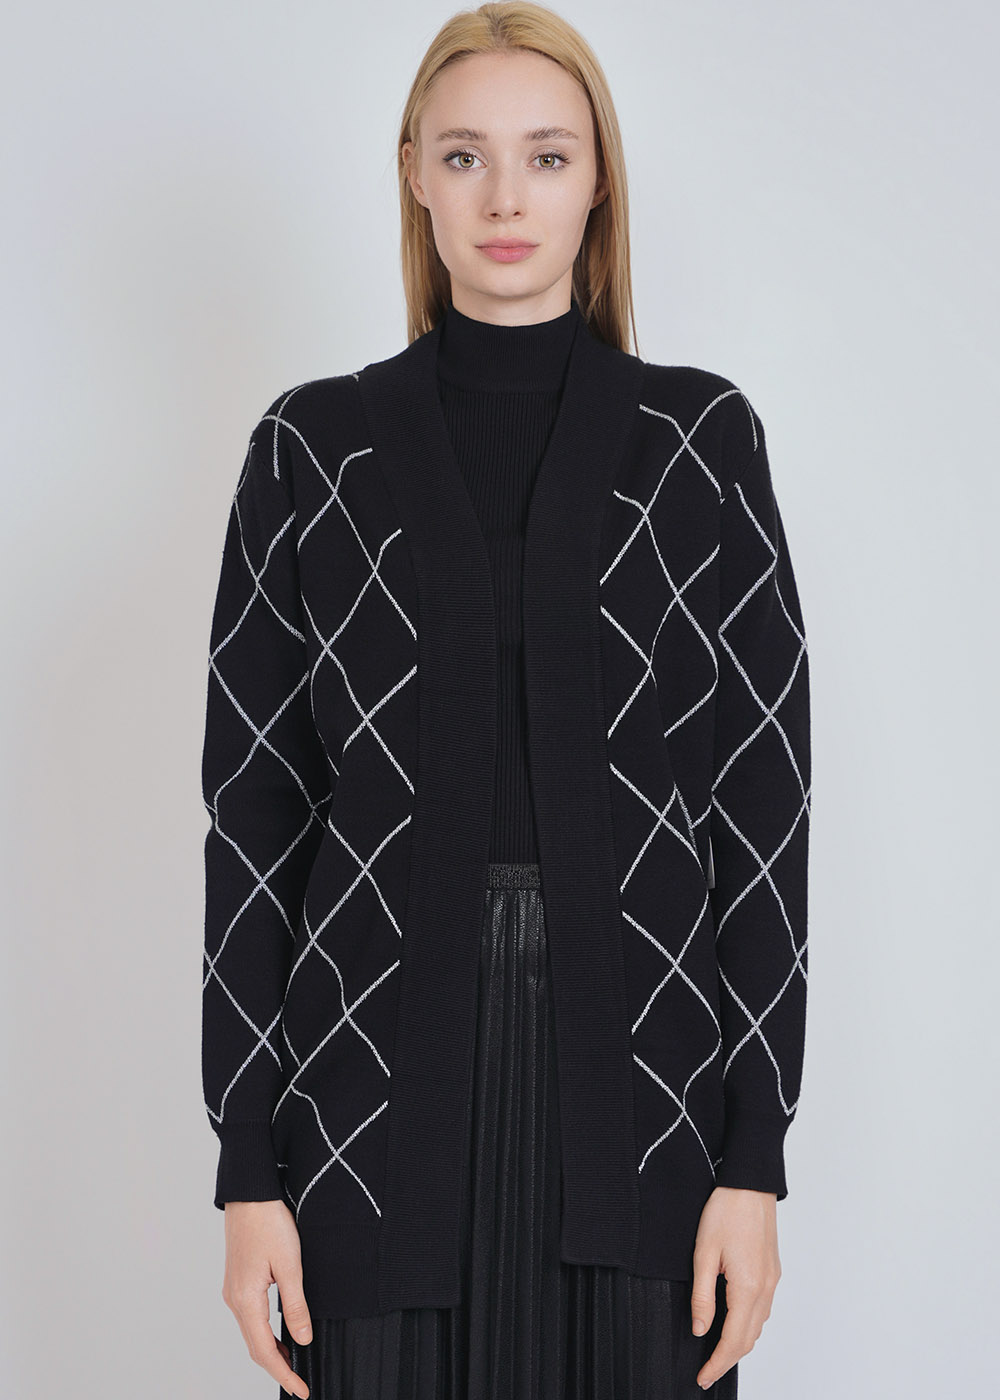 Black Knit Cardigan: Subtle White Geometric Accents